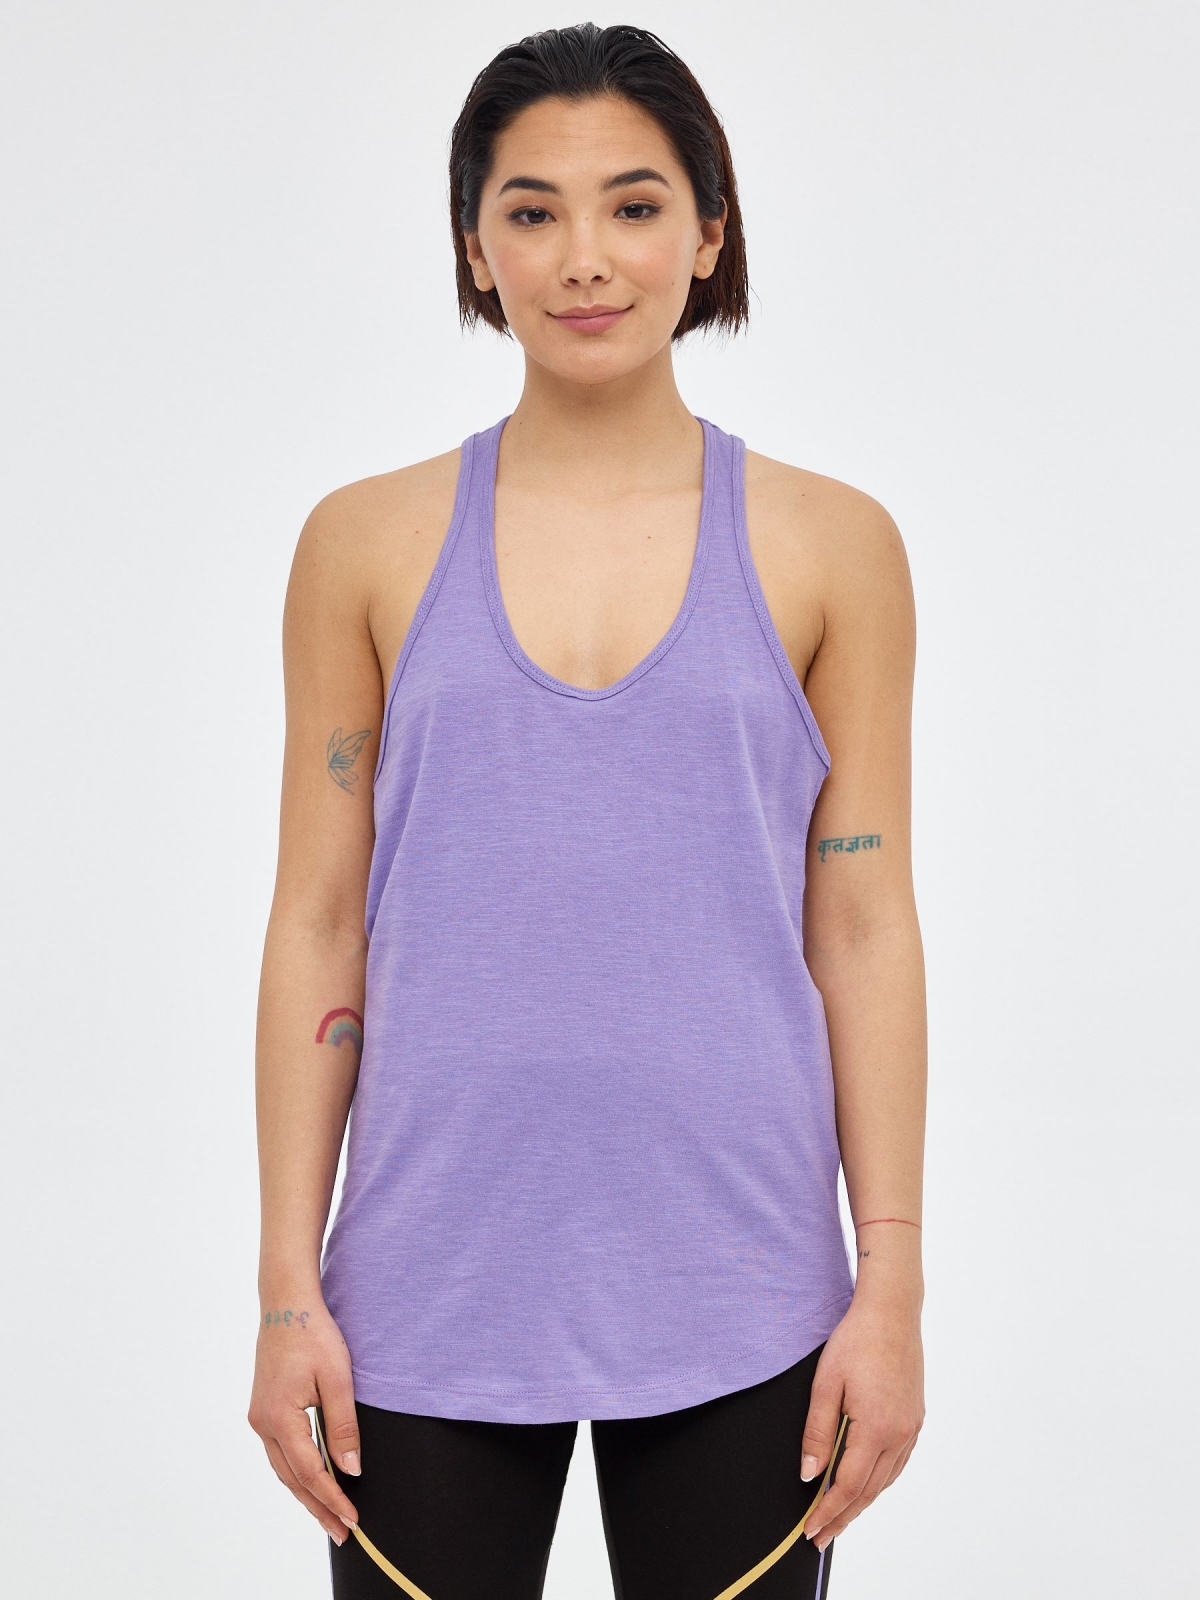 Camiseta espalda nadadora lila vista media frontal